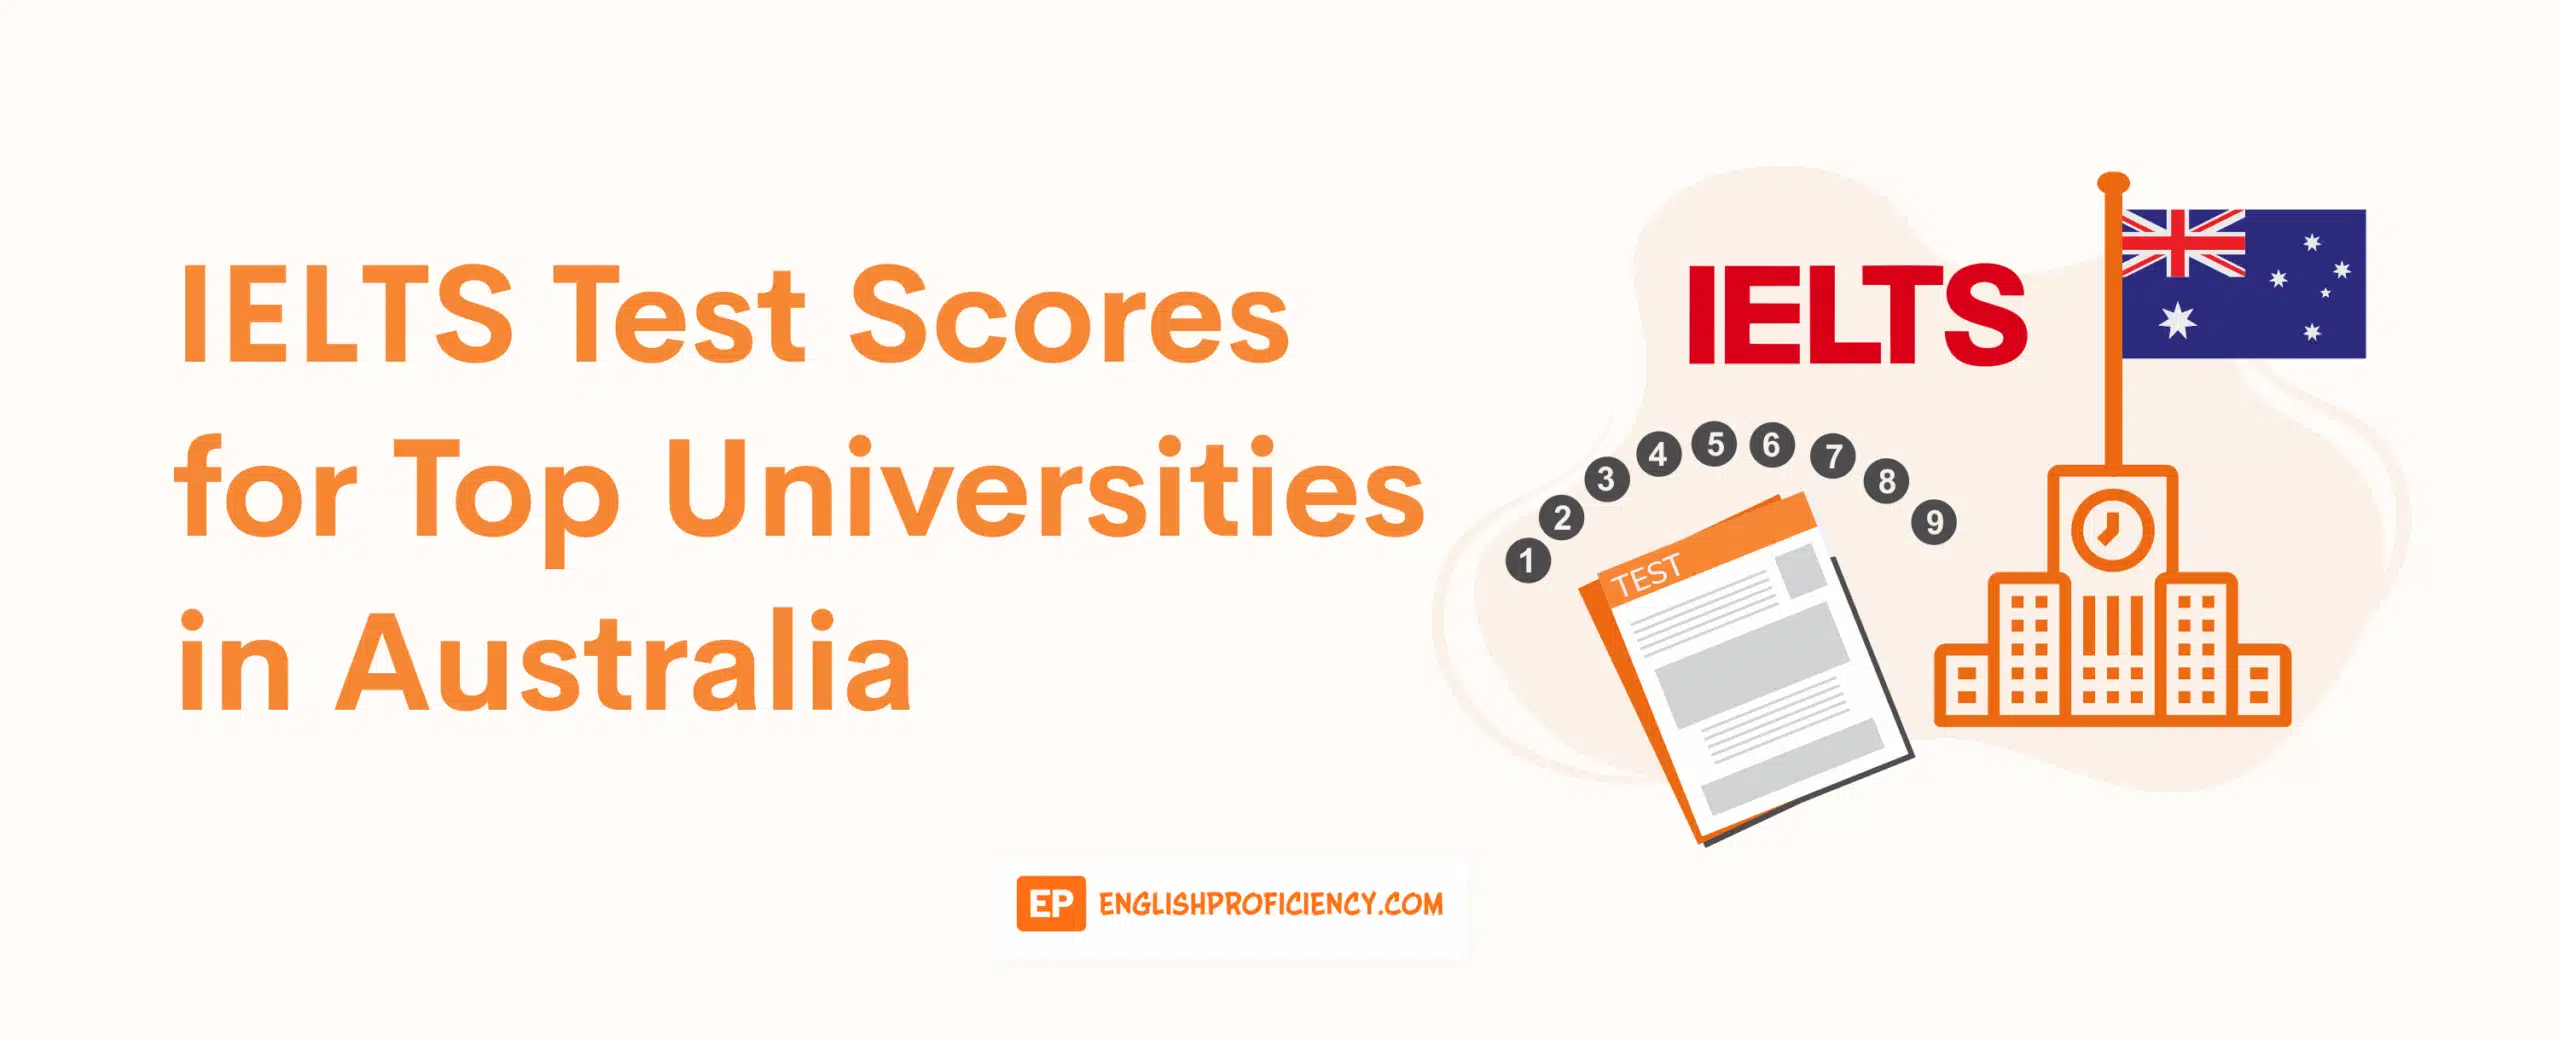 IELTS Test Scores for the Top Universities in Australia